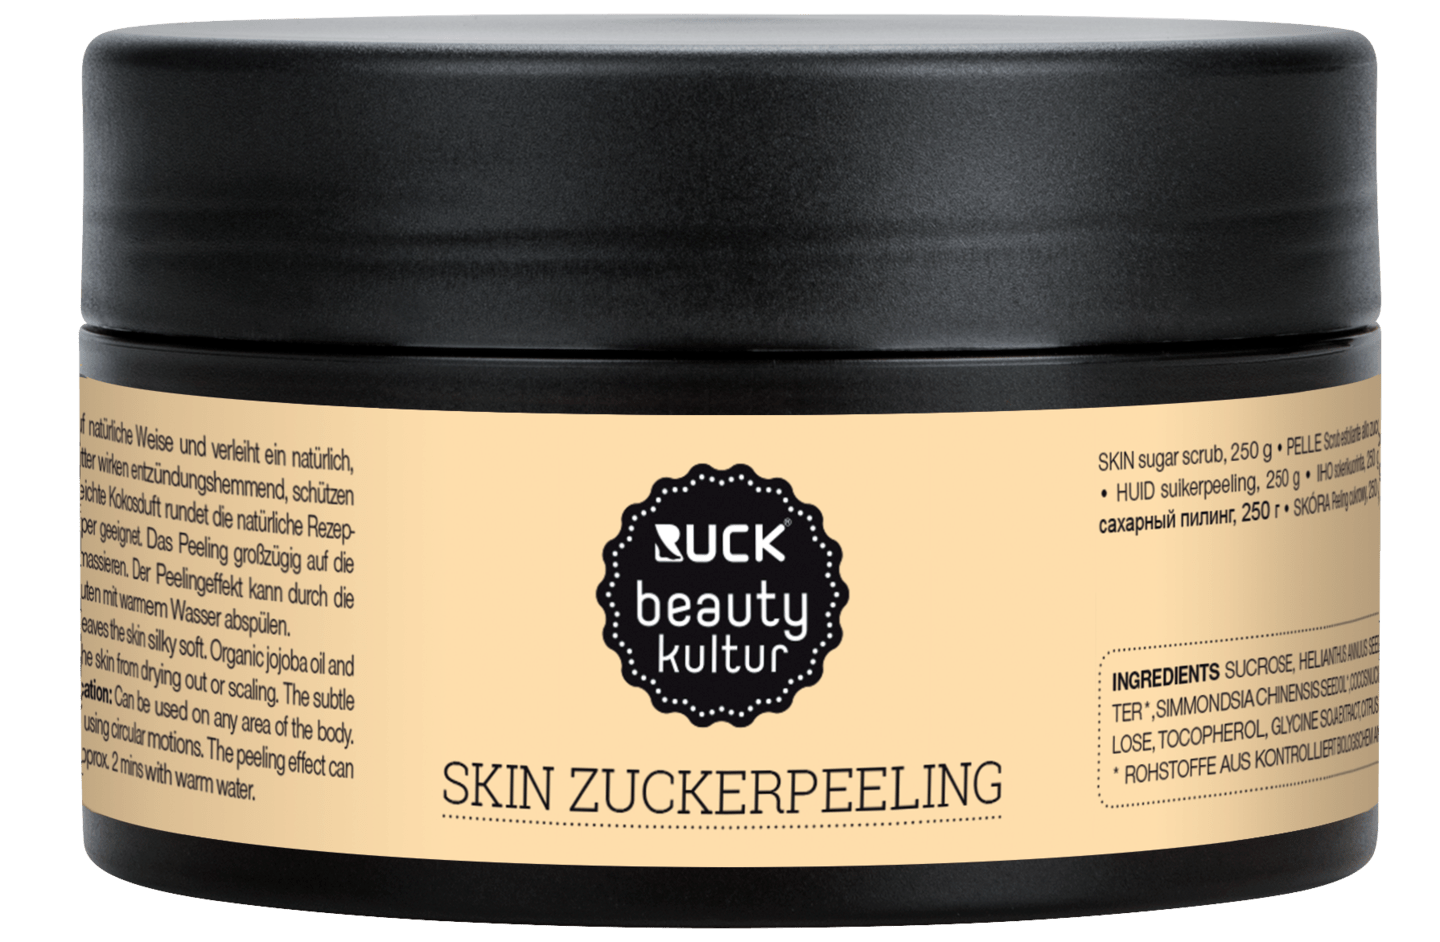 RUCK beautykultur - SKIN Zuckerpeeling, 250 g